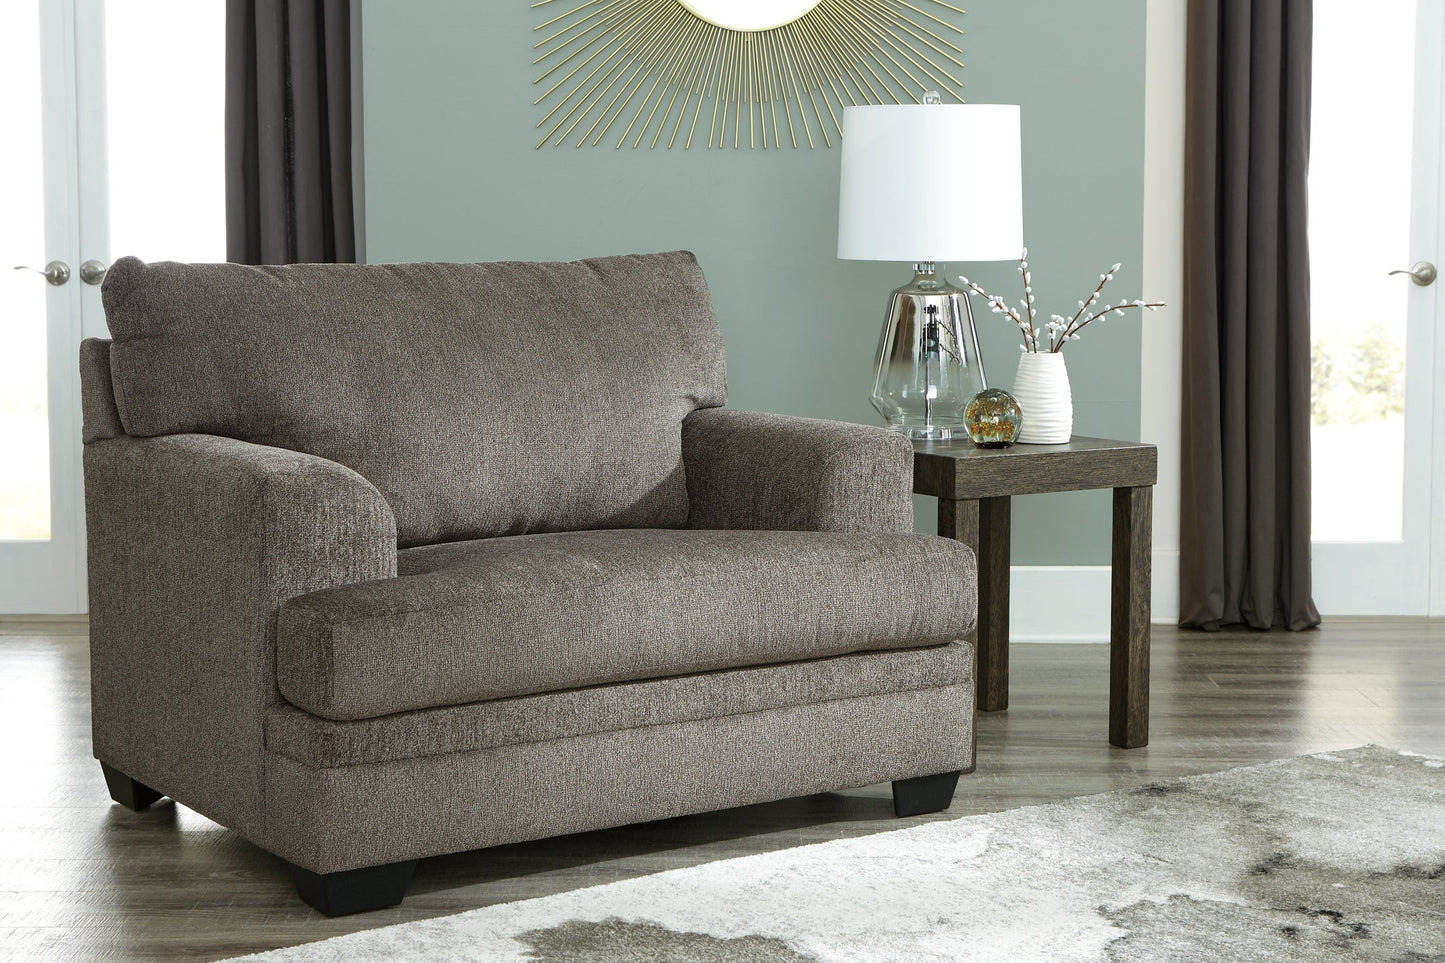 Dorsten Chair and a Half at Cloud 9 Mattress & Furniture furniture, home furnishing, home decor